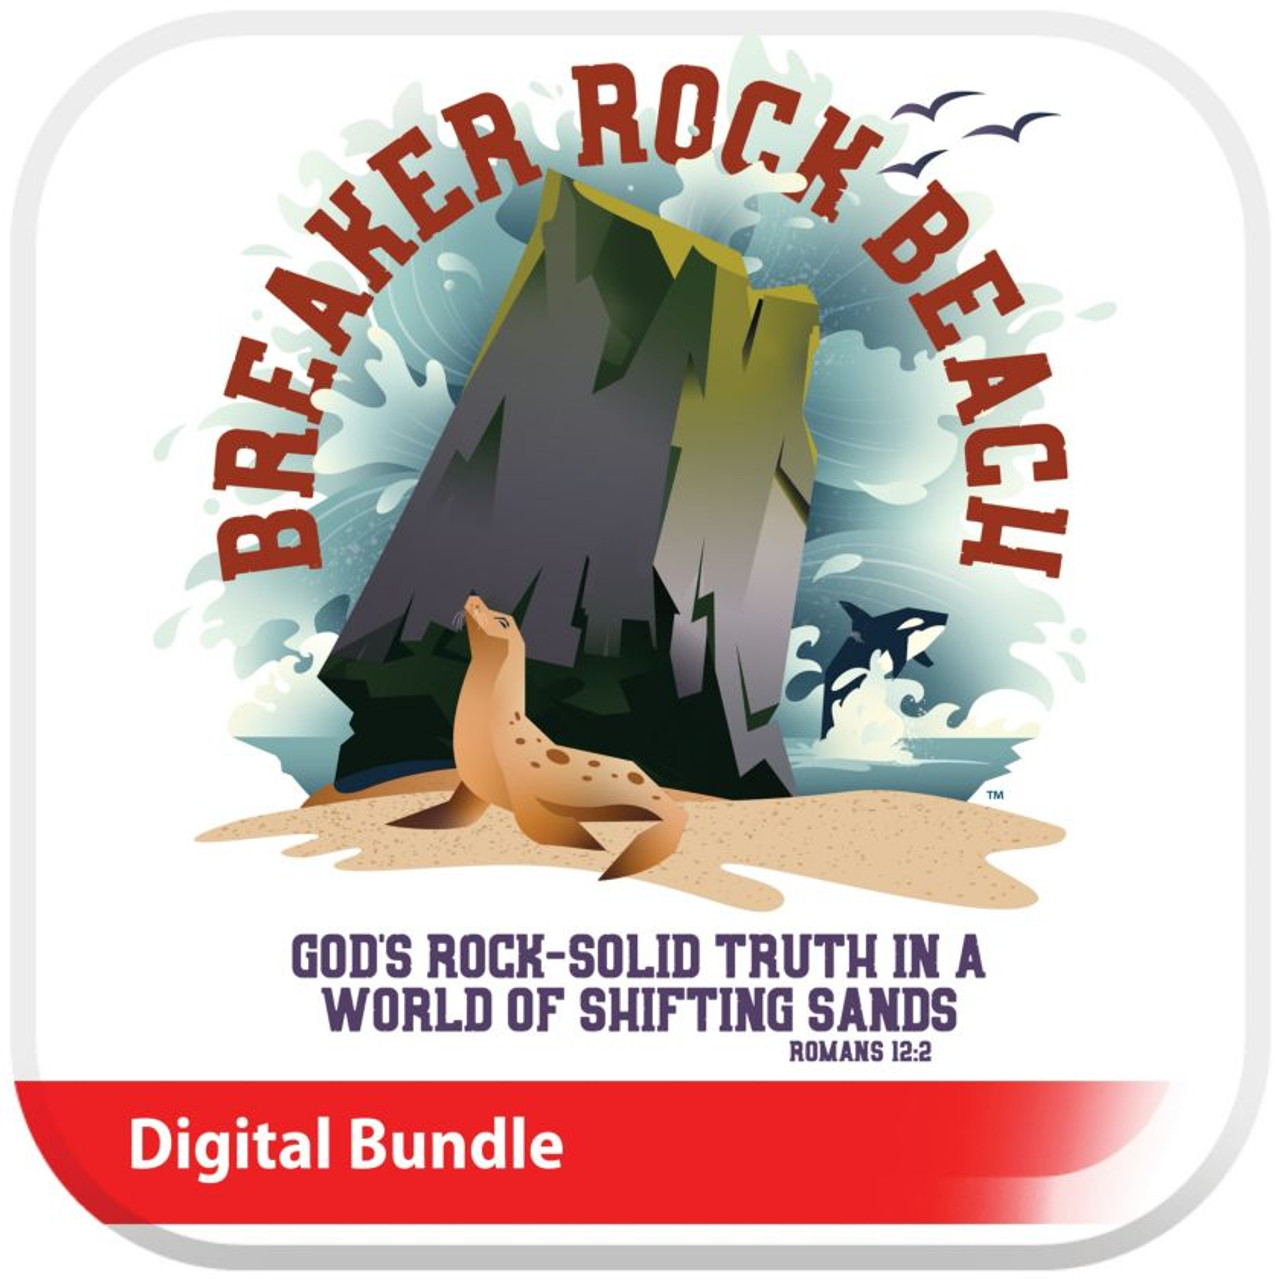 Free Resources & Downloads, Breaker Rock Beach VBS 2024